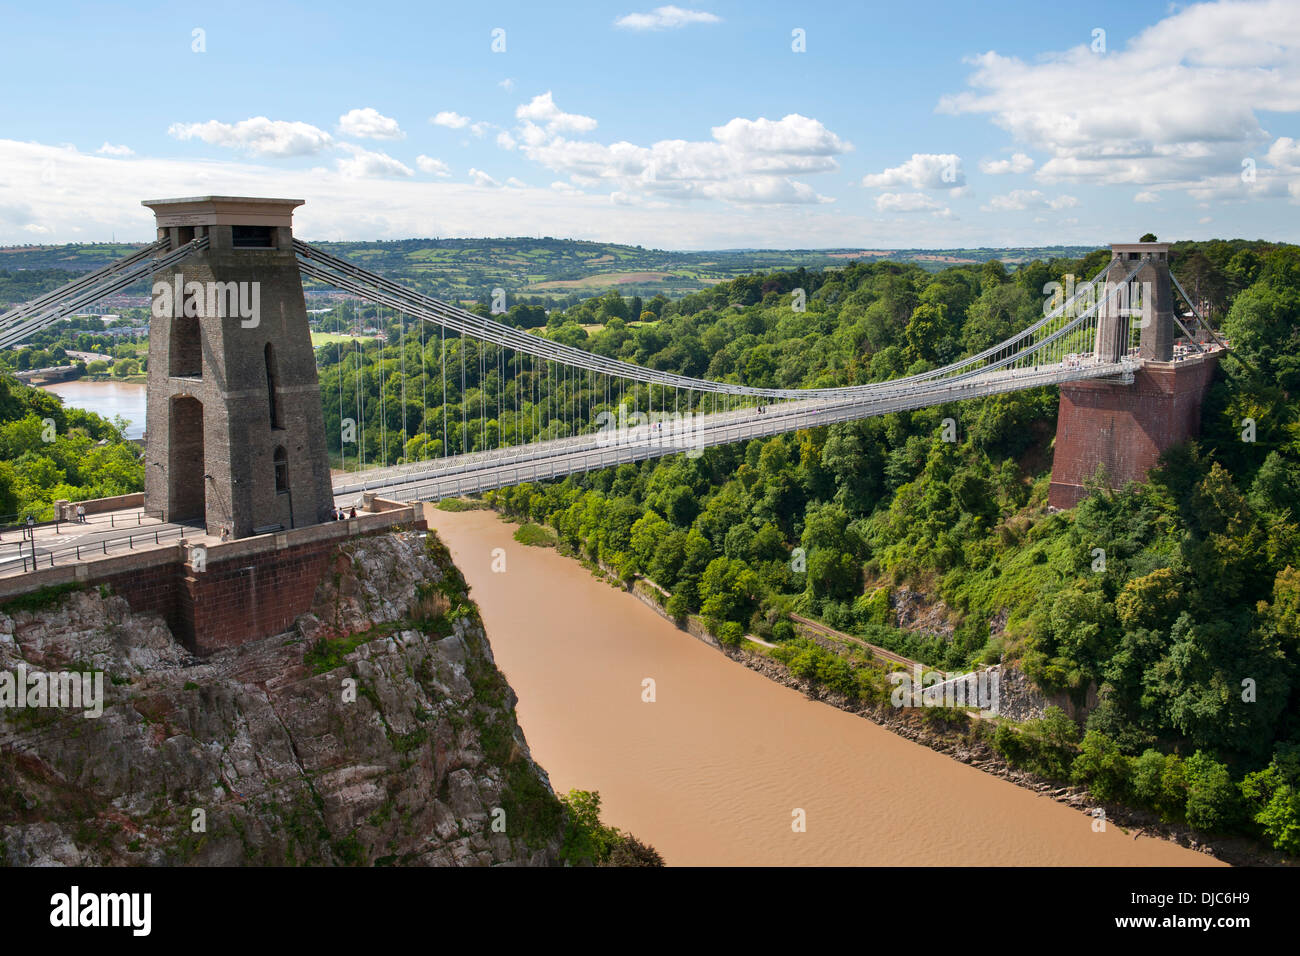 The Clifton Suspension Bridge spanning the Avon River in Bristol, England. Stock Photo